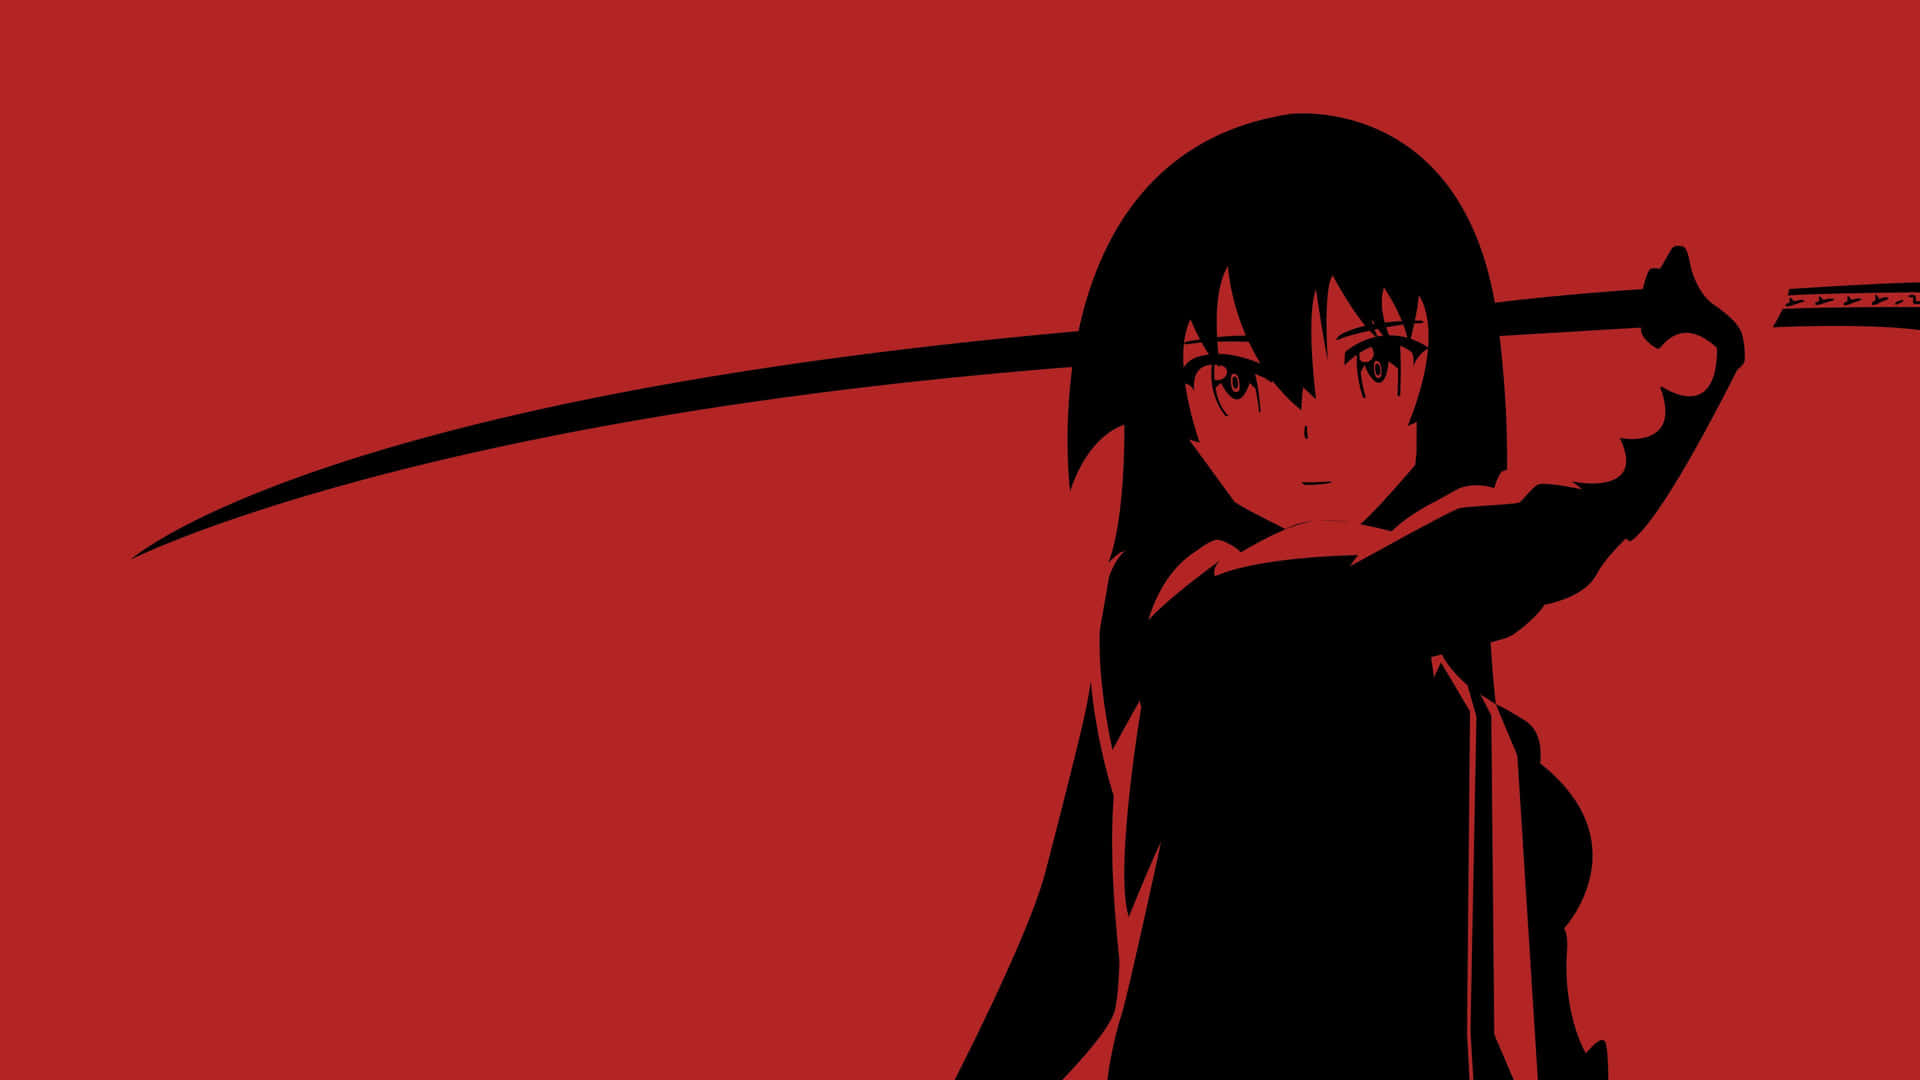 Anime girl red eyes Wallpaper 8k HD ID:11289